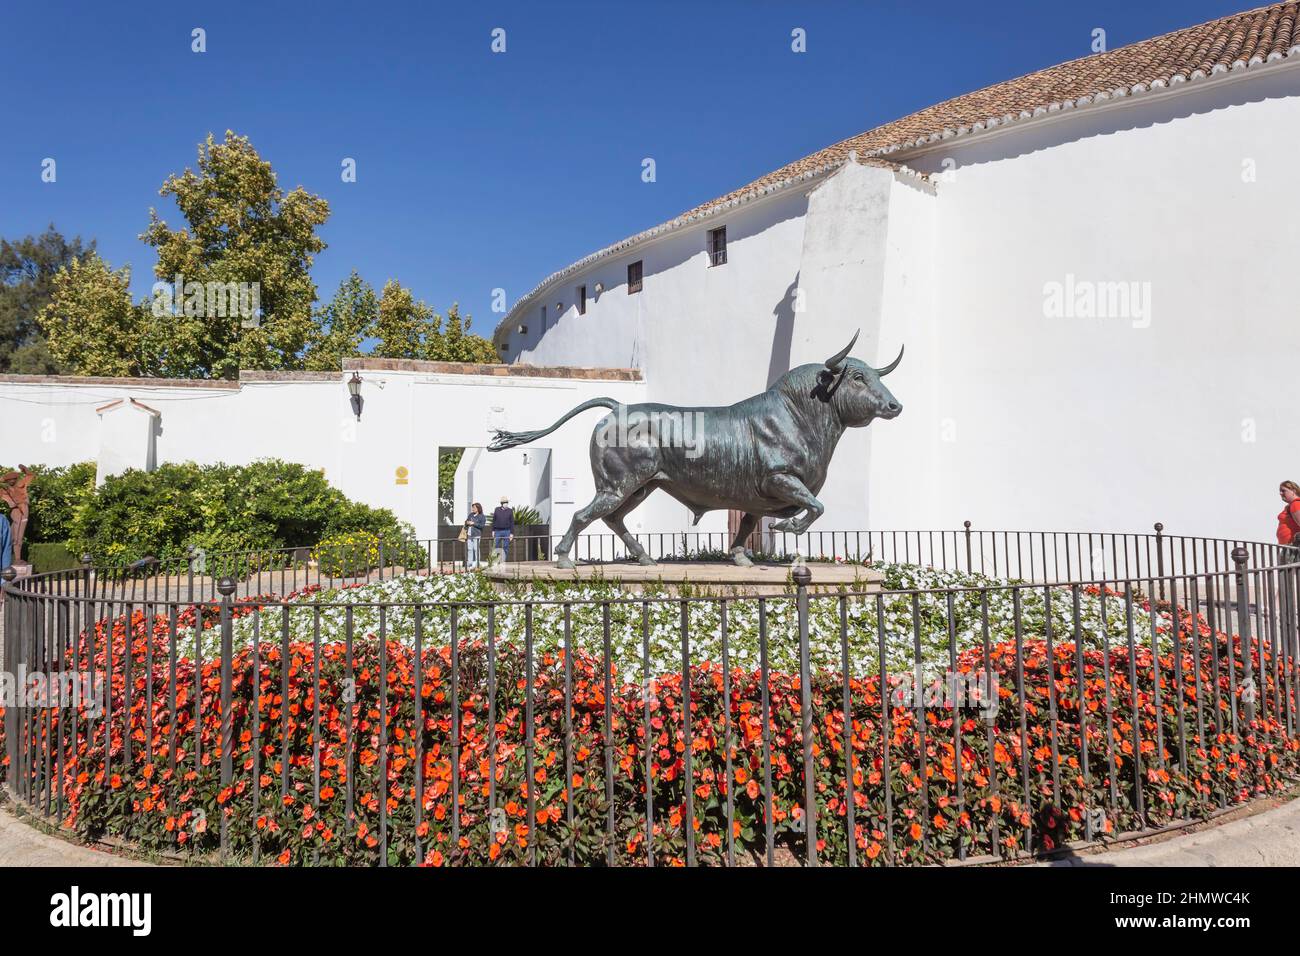 Ronda, province de Malaga, Espagne. Statue en bronze d'un taureau de combat, sculptée par Nacho Martin. Banque D'Images